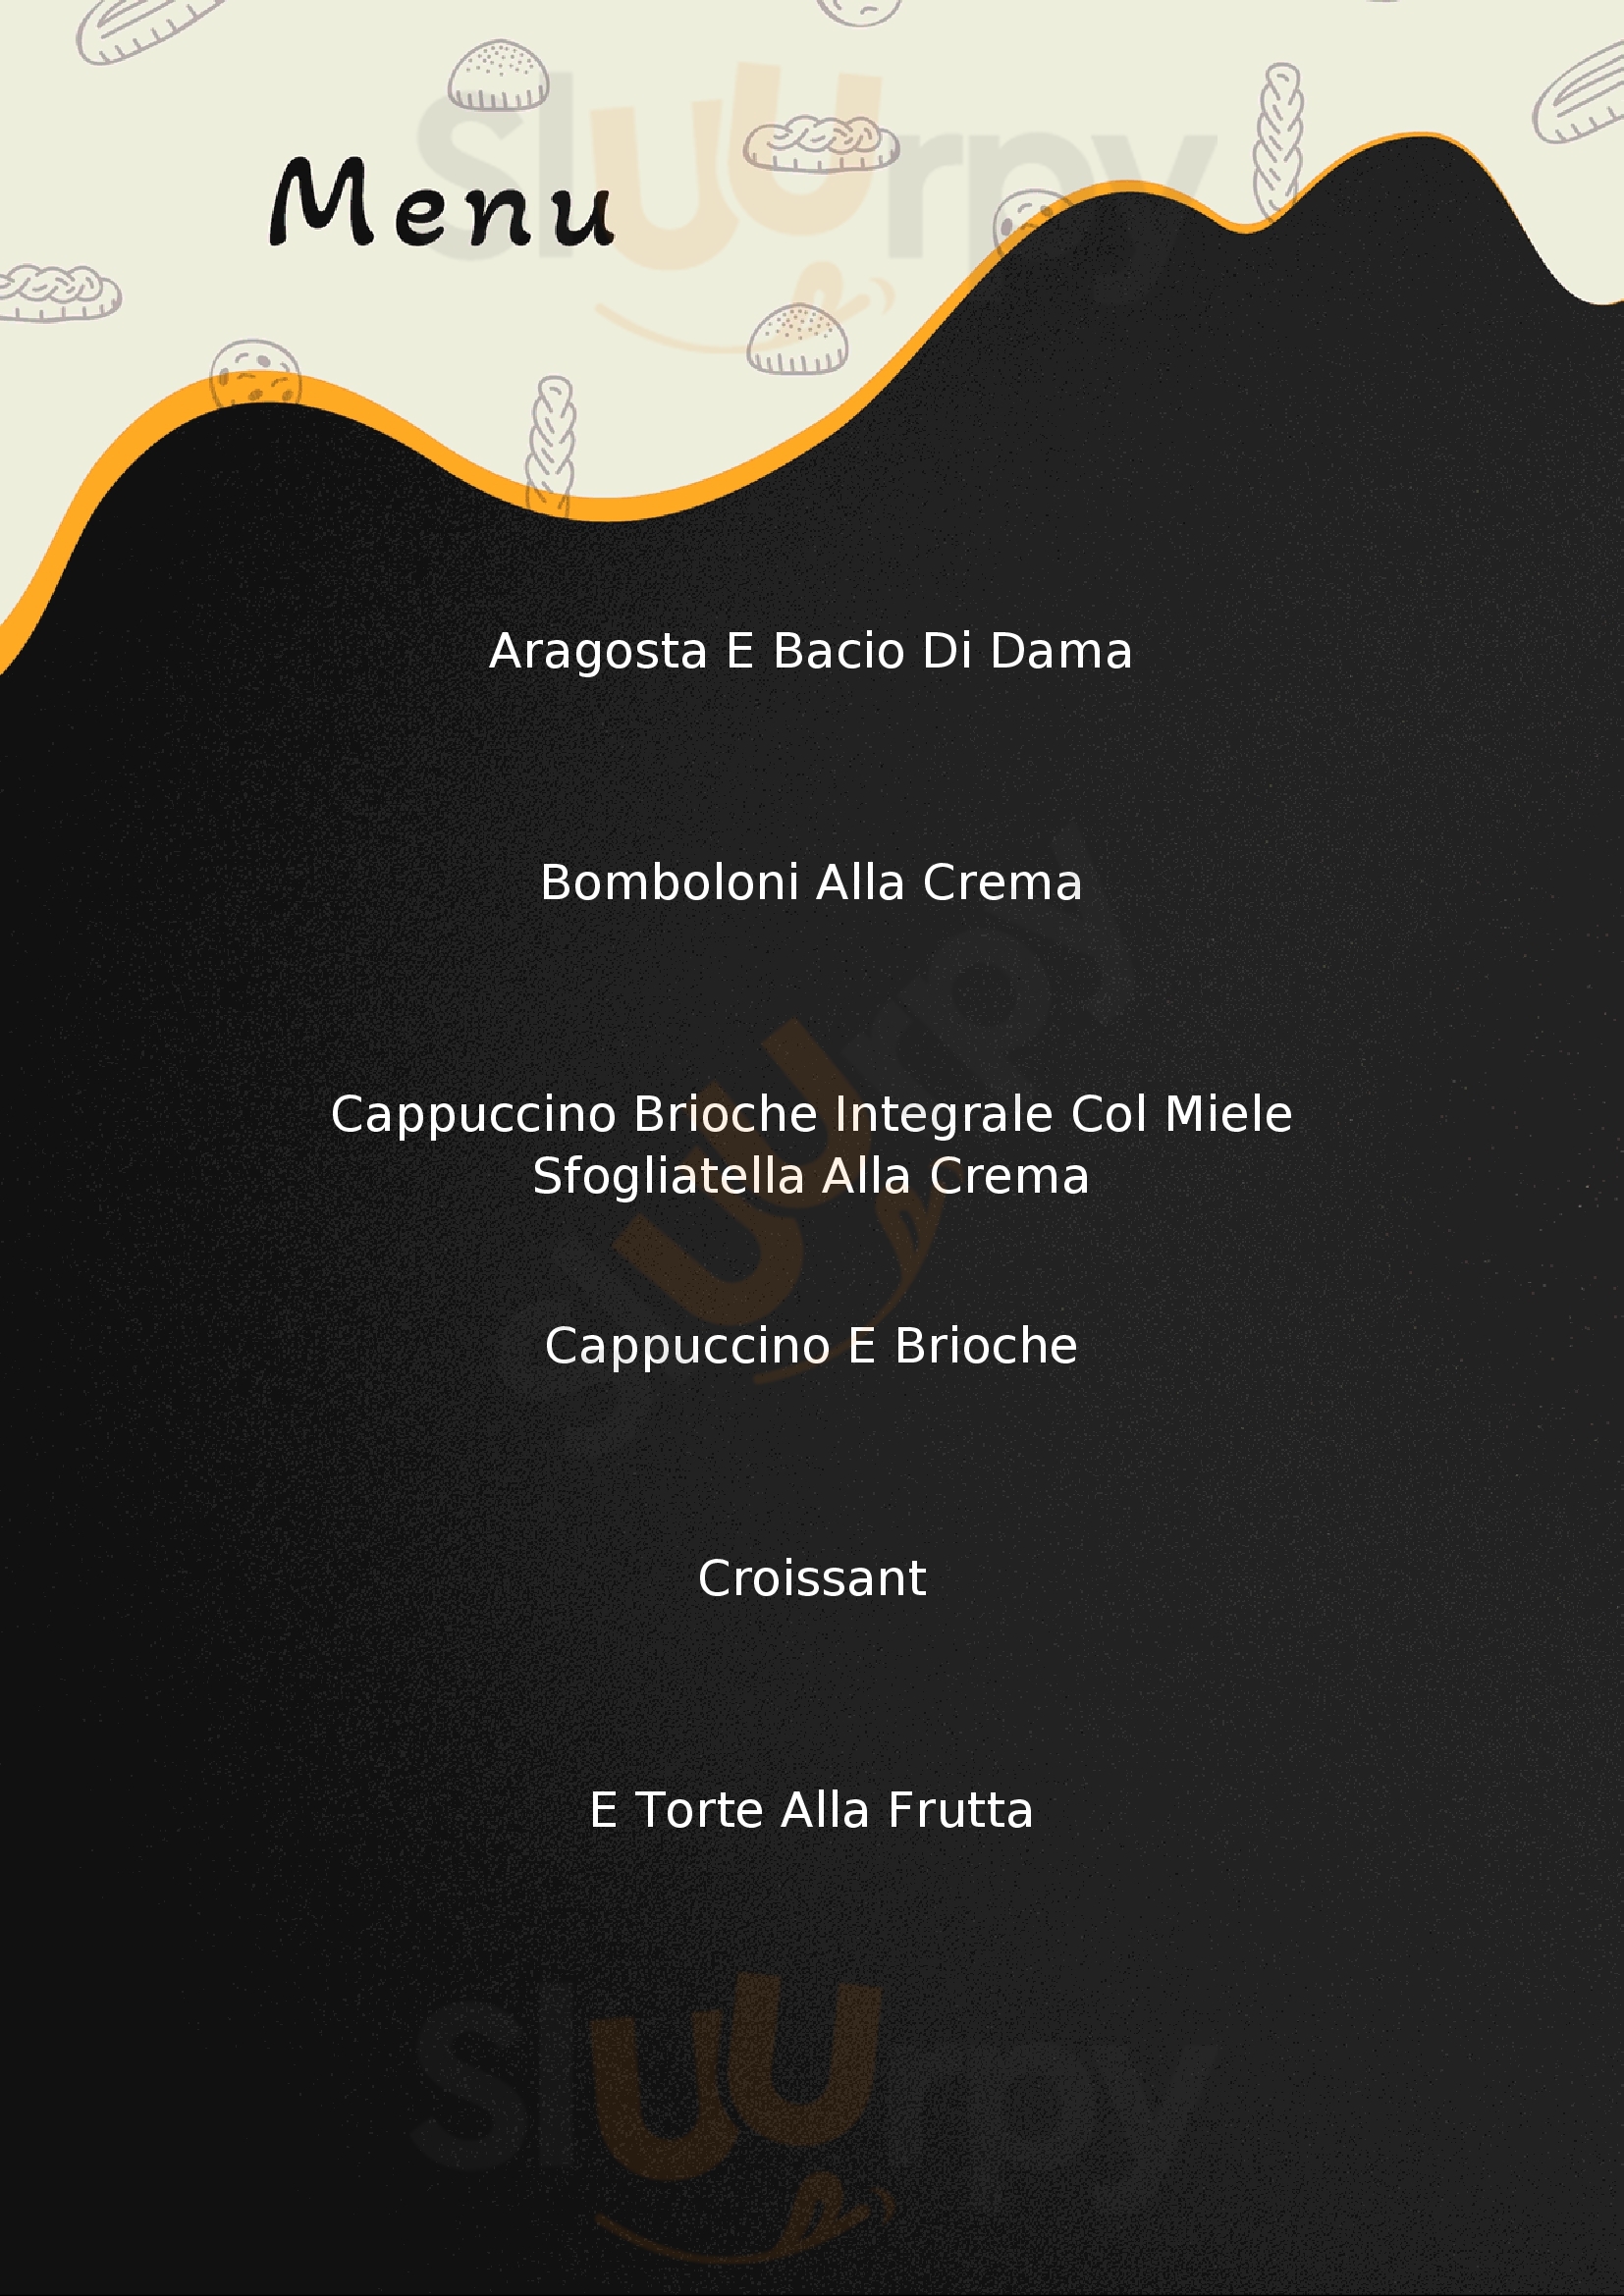 Pasticceria Torinese Lignano Sabbiadoro menù 1 pagina